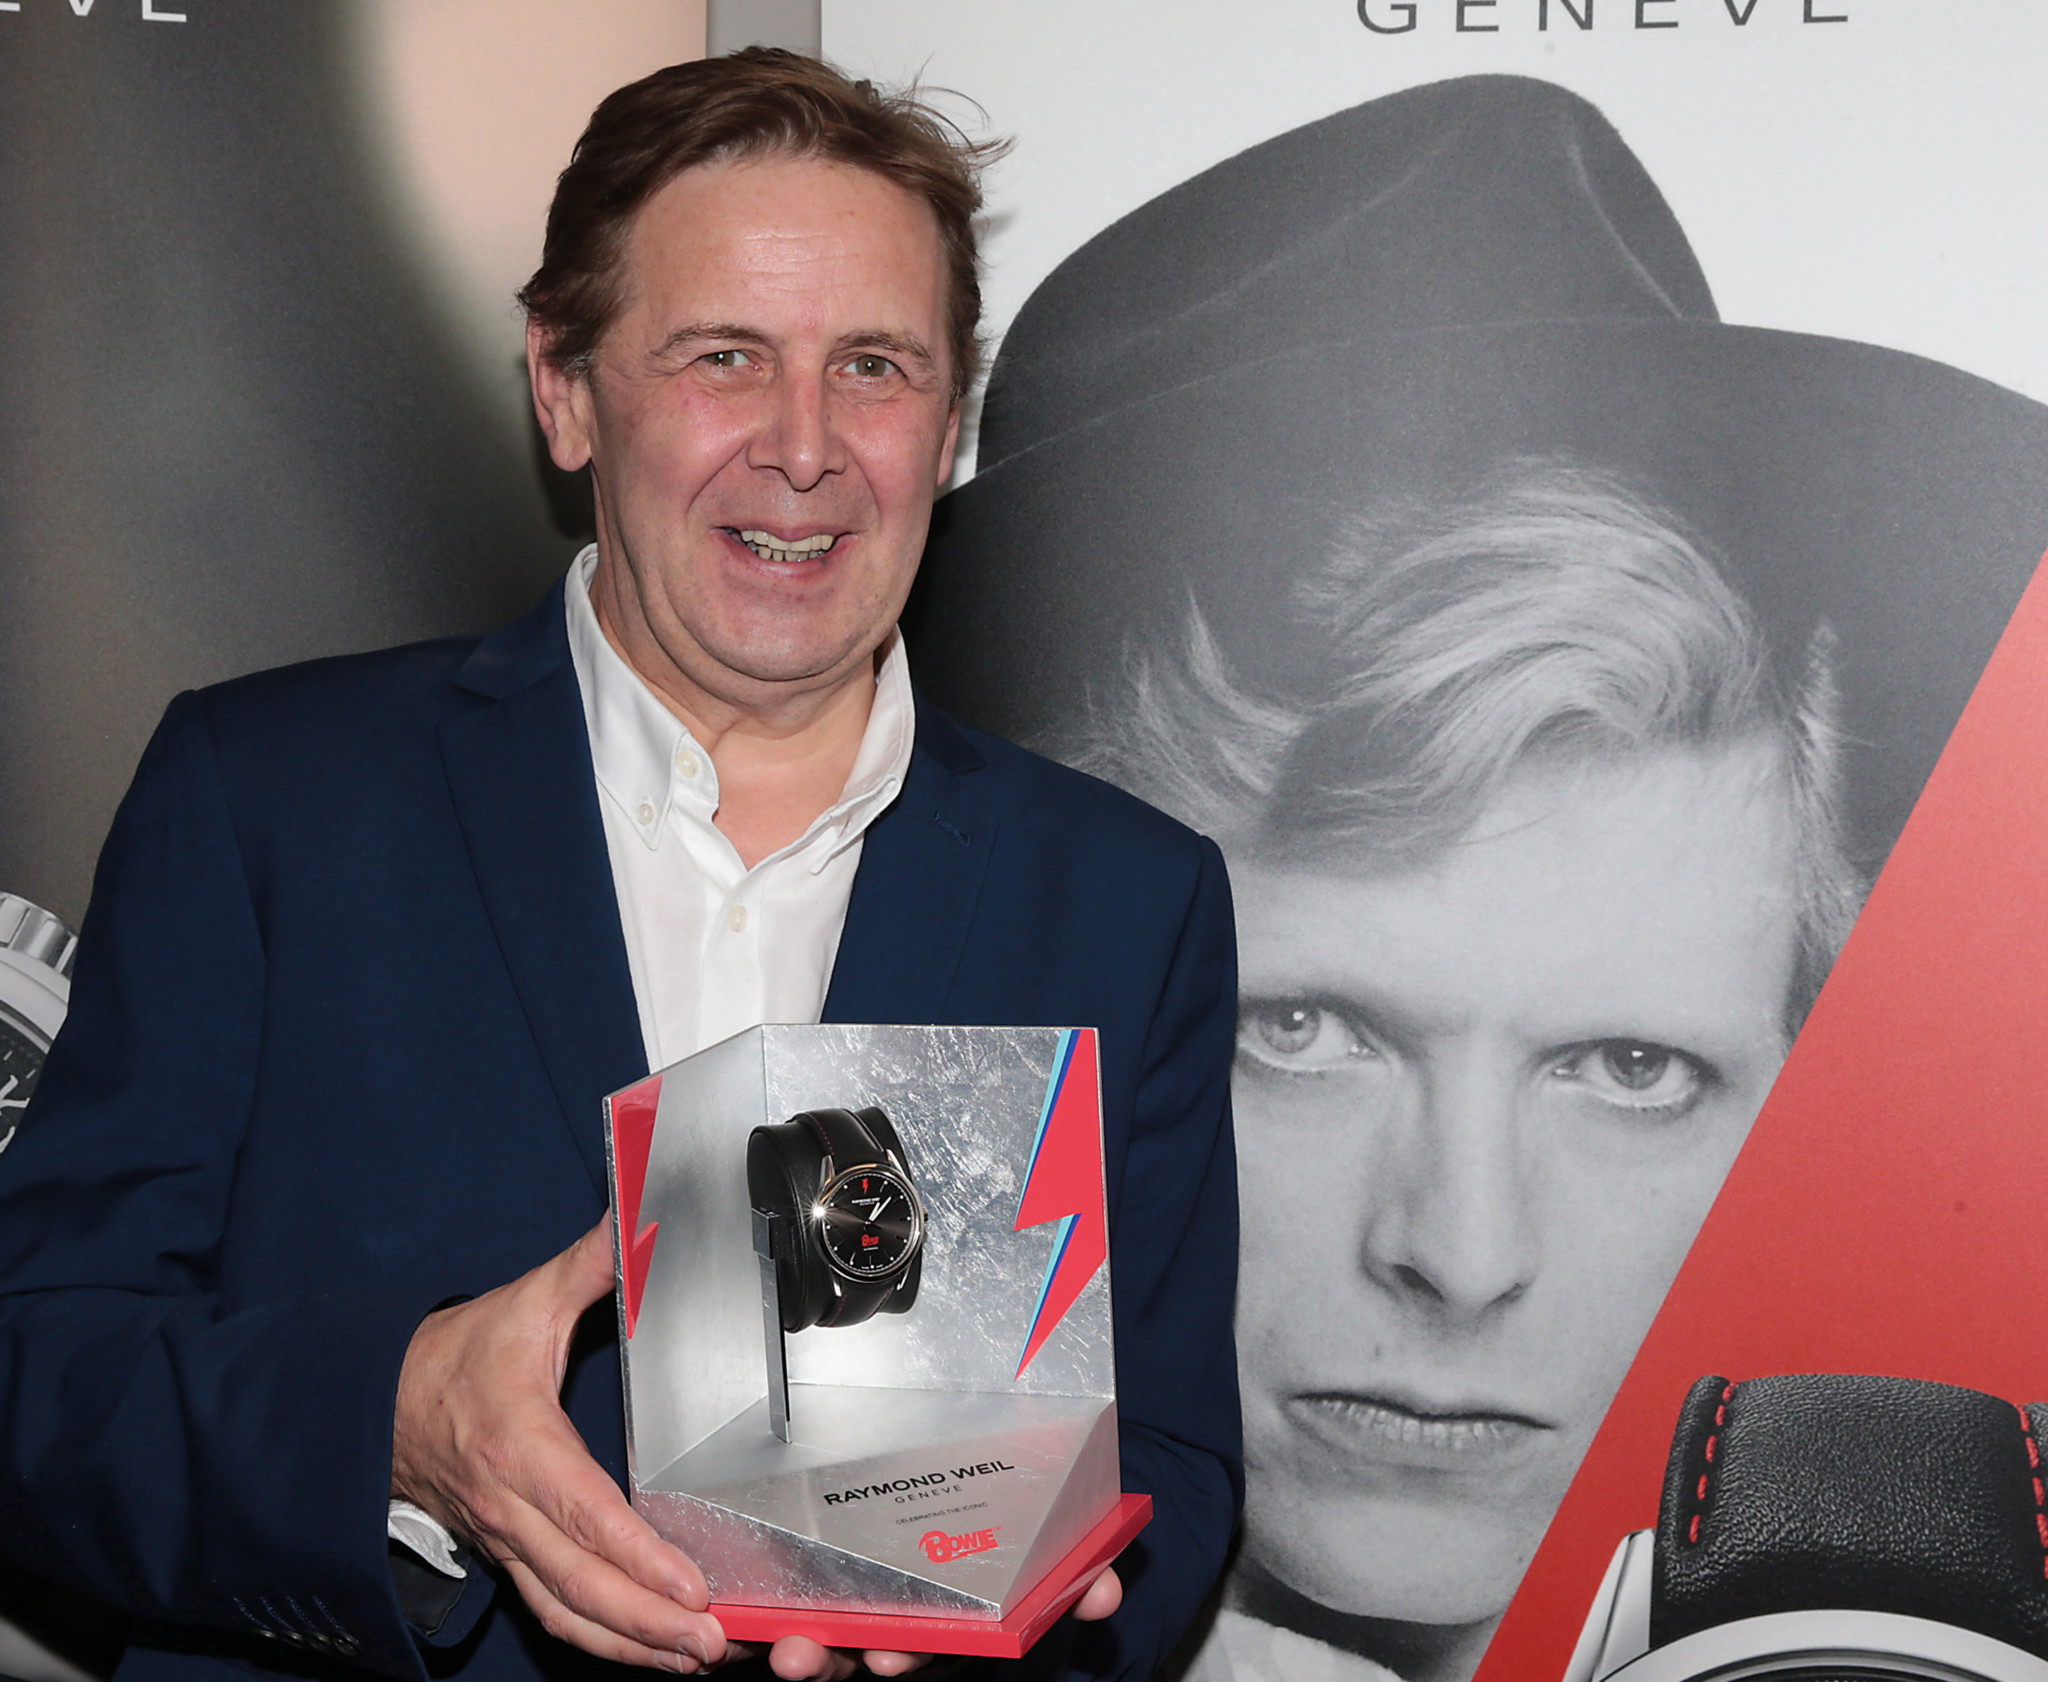 Ian dempsey was presented with a raymond weil limited edition freelancer david bowie watch.